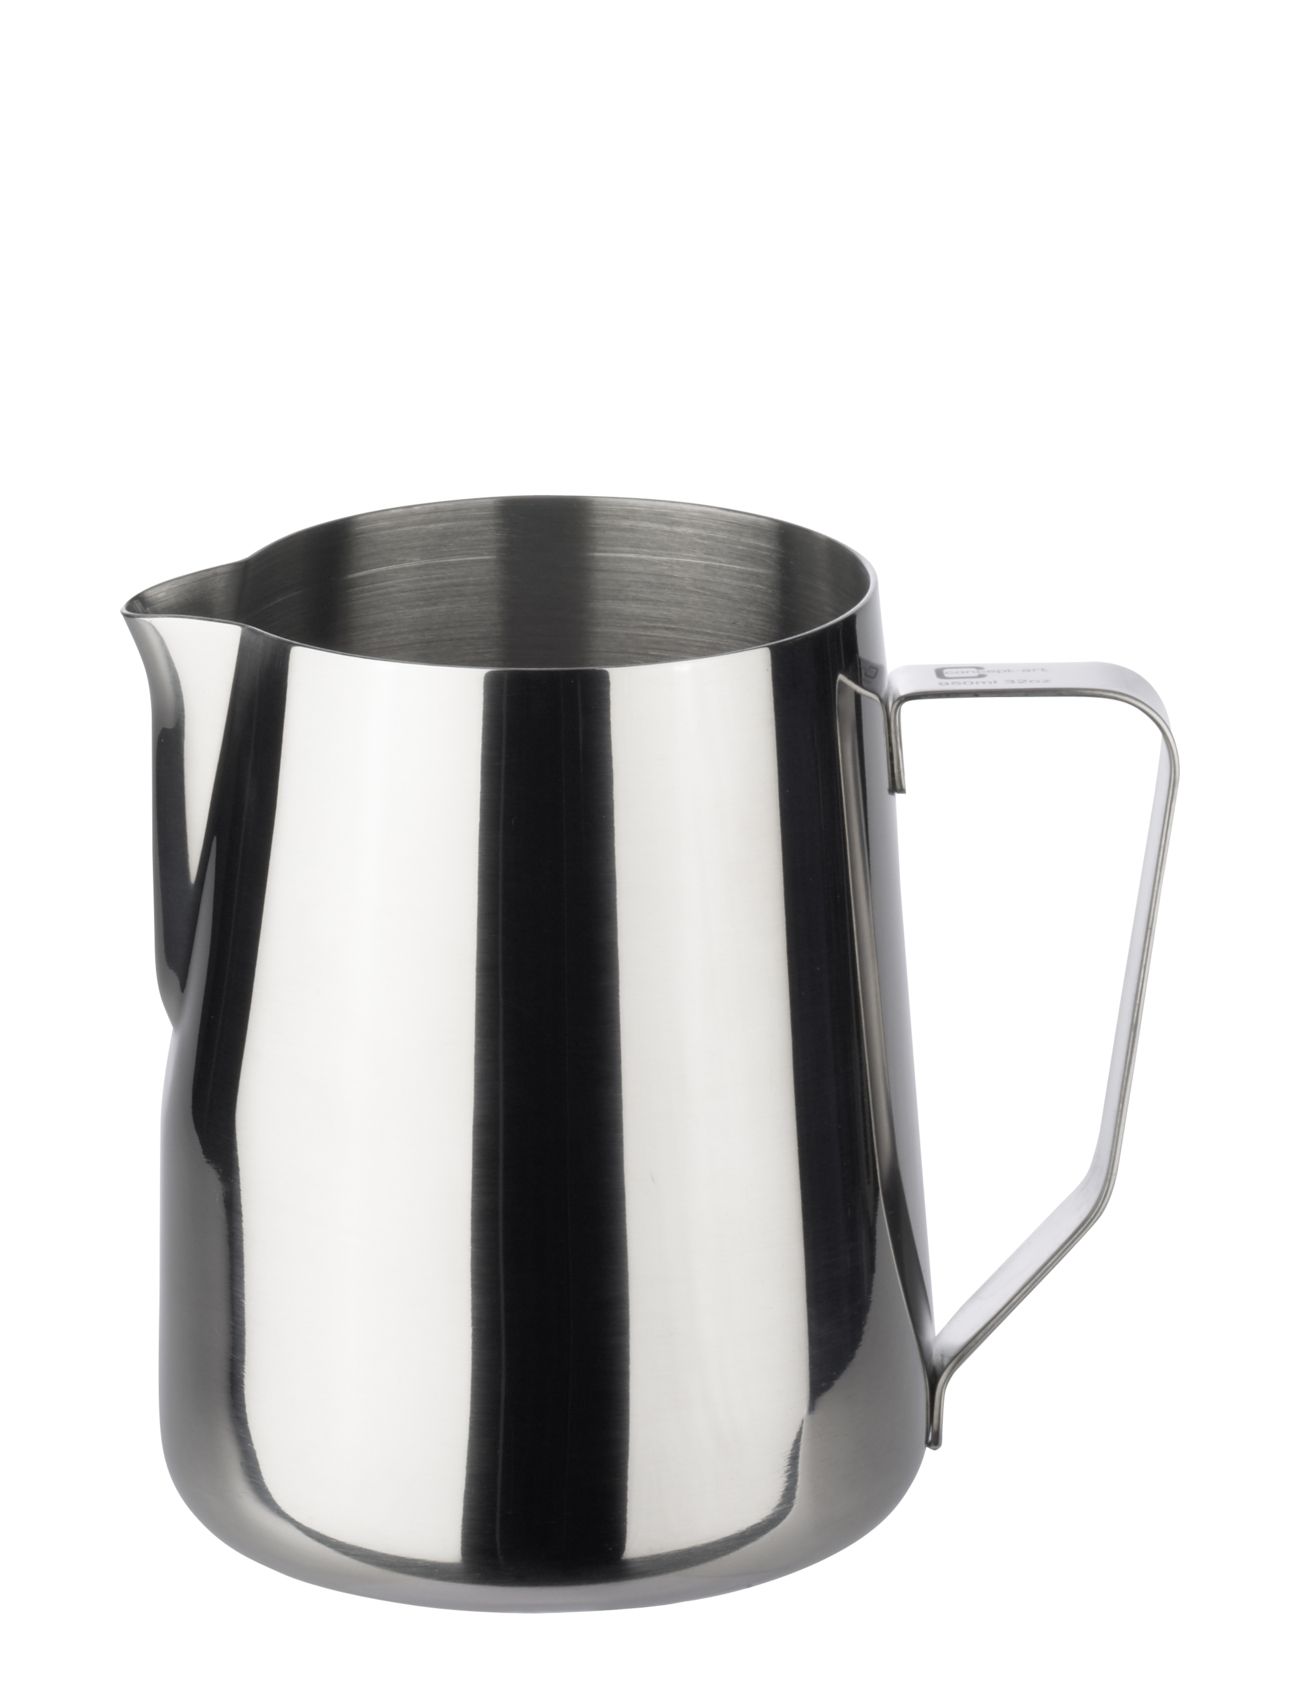 Mælkekande Home Kitchen Tea & Coffee Accessories Coffee Filters & Accessories Silver Joe Frex